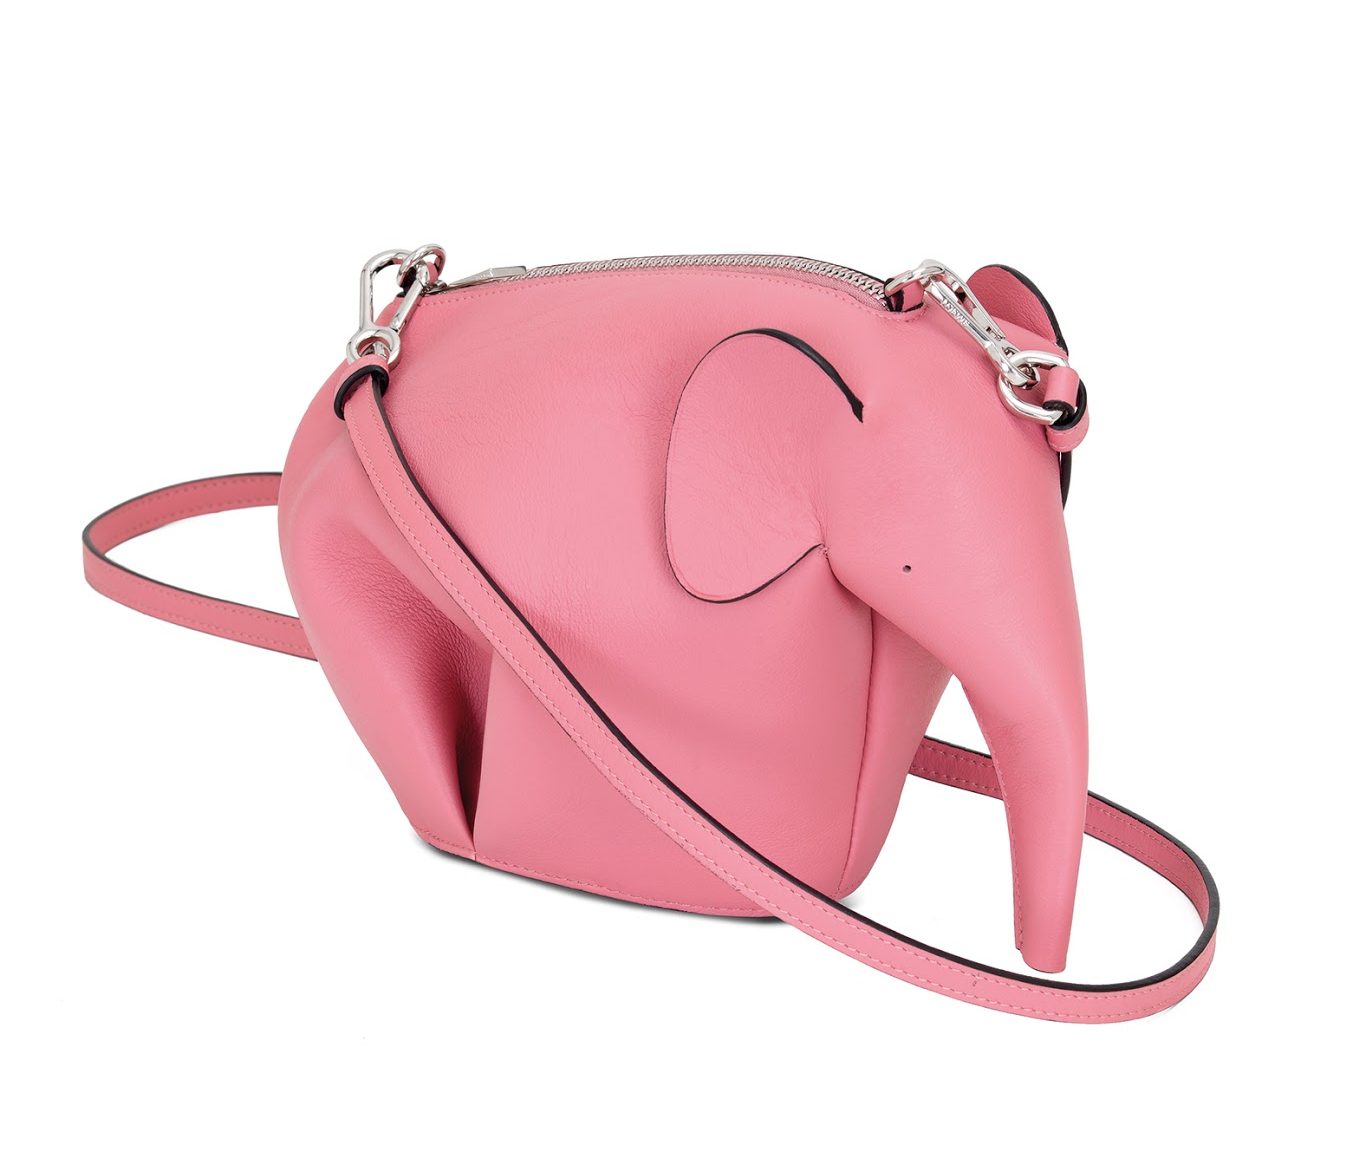 Loewe's Candy Elephant Bag